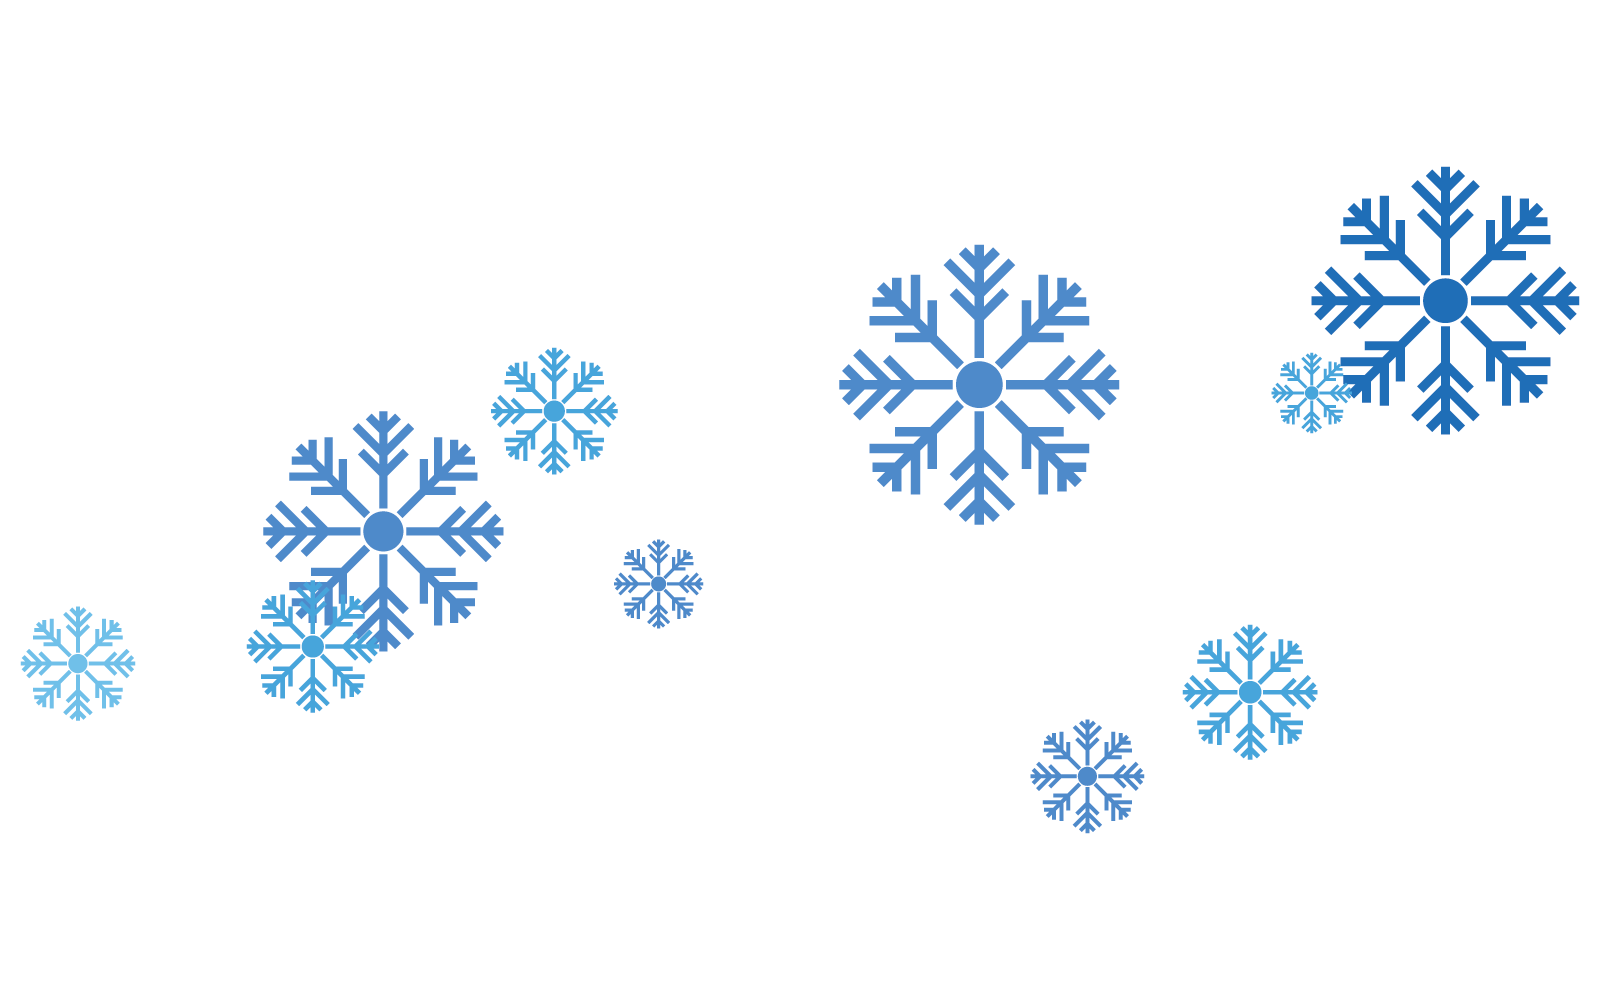 Snowflakes Background Snowfall Illustration Vector Flat Design